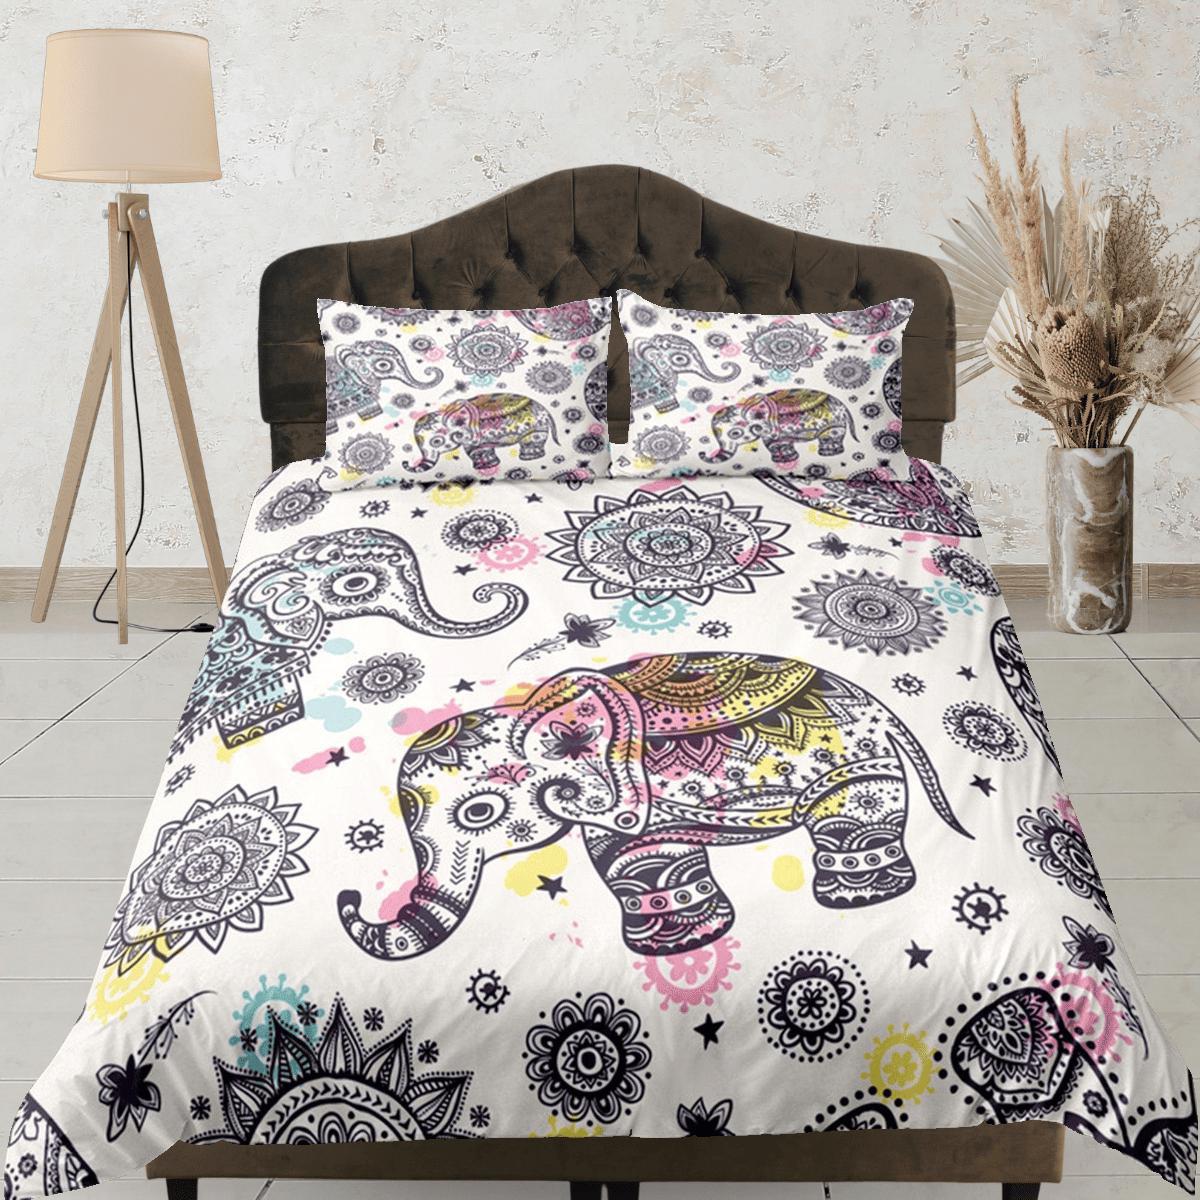 daintyduvet Elephant Batik Duvet Cover Set Boho Bedding, Animal Dorm Bedding with Pillowcase